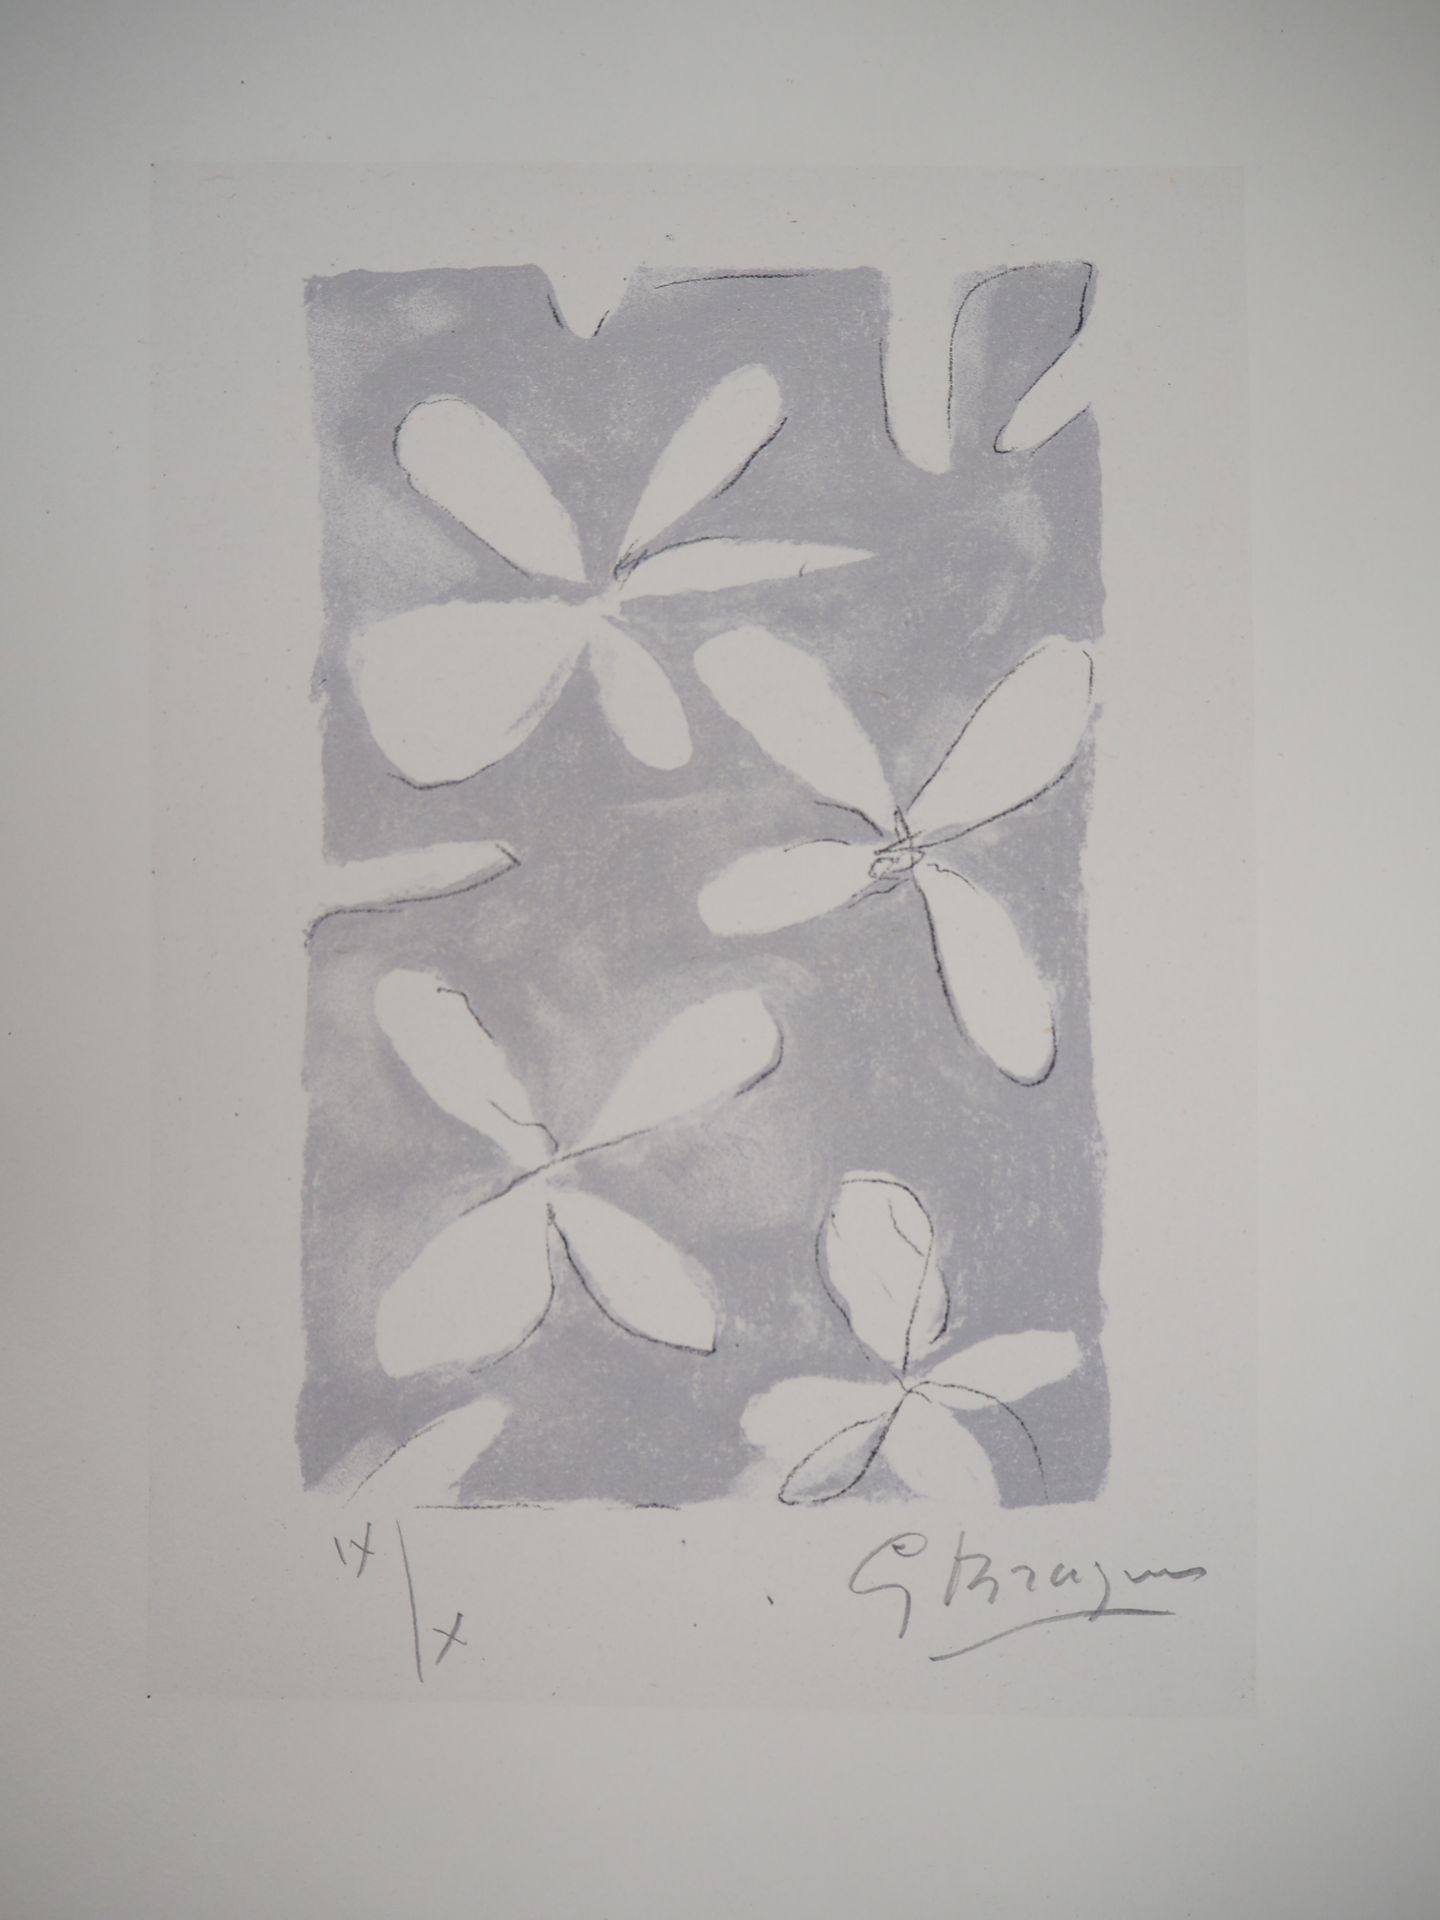 Georges Braque 乔治-布拉克 (1882-1963)

花床，1960年

原始石版画

用铅笔签名

编号/10份罗马数字

在Desjober&hellip;